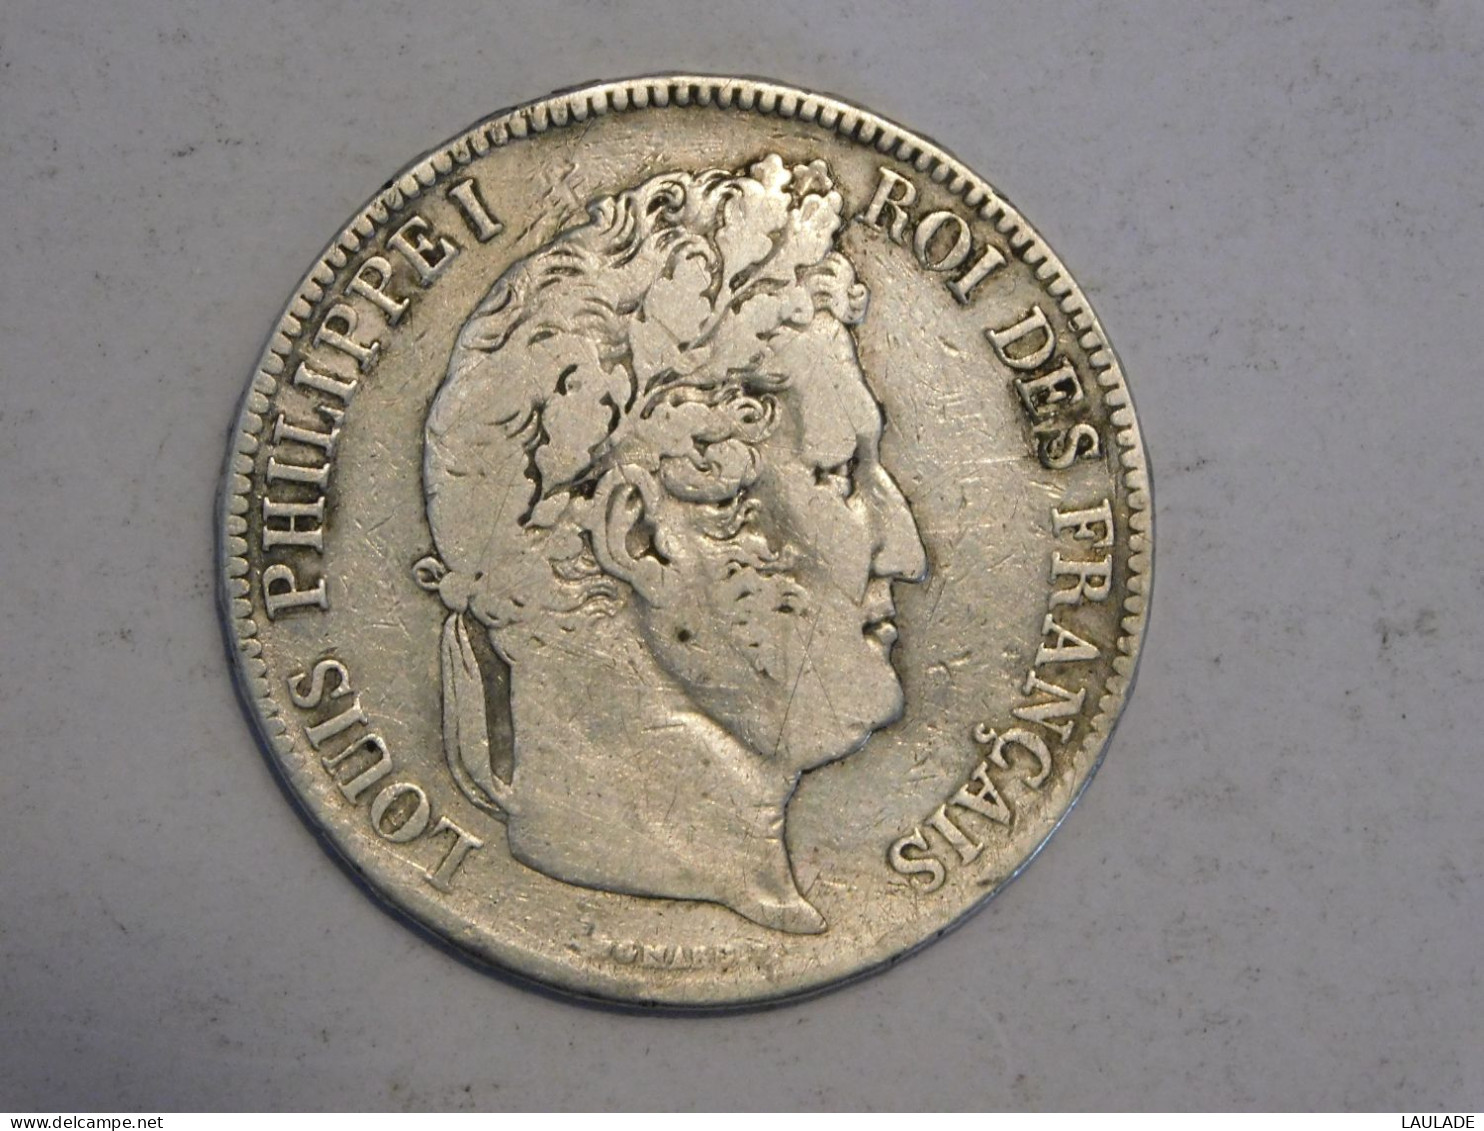 FRANCE 5 Francs 1836 A - Silver, Argent Franc - 5 Francs